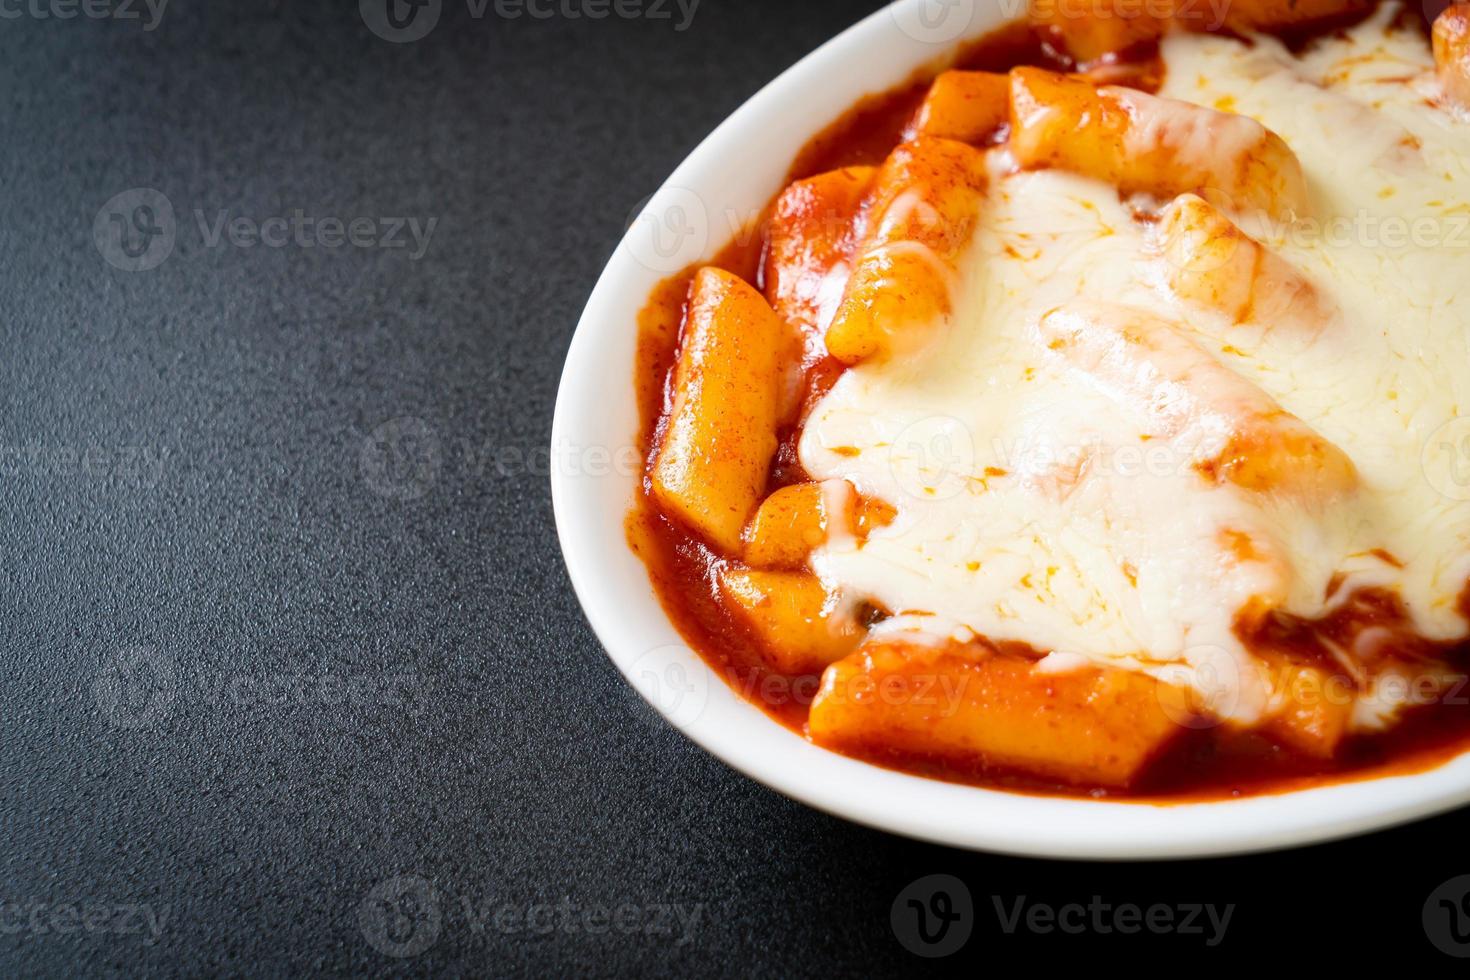 koreaanse rijstwafel in pittige koreaanse saus met kaas, kaas tokpokki, tteokbokki met kaas foto